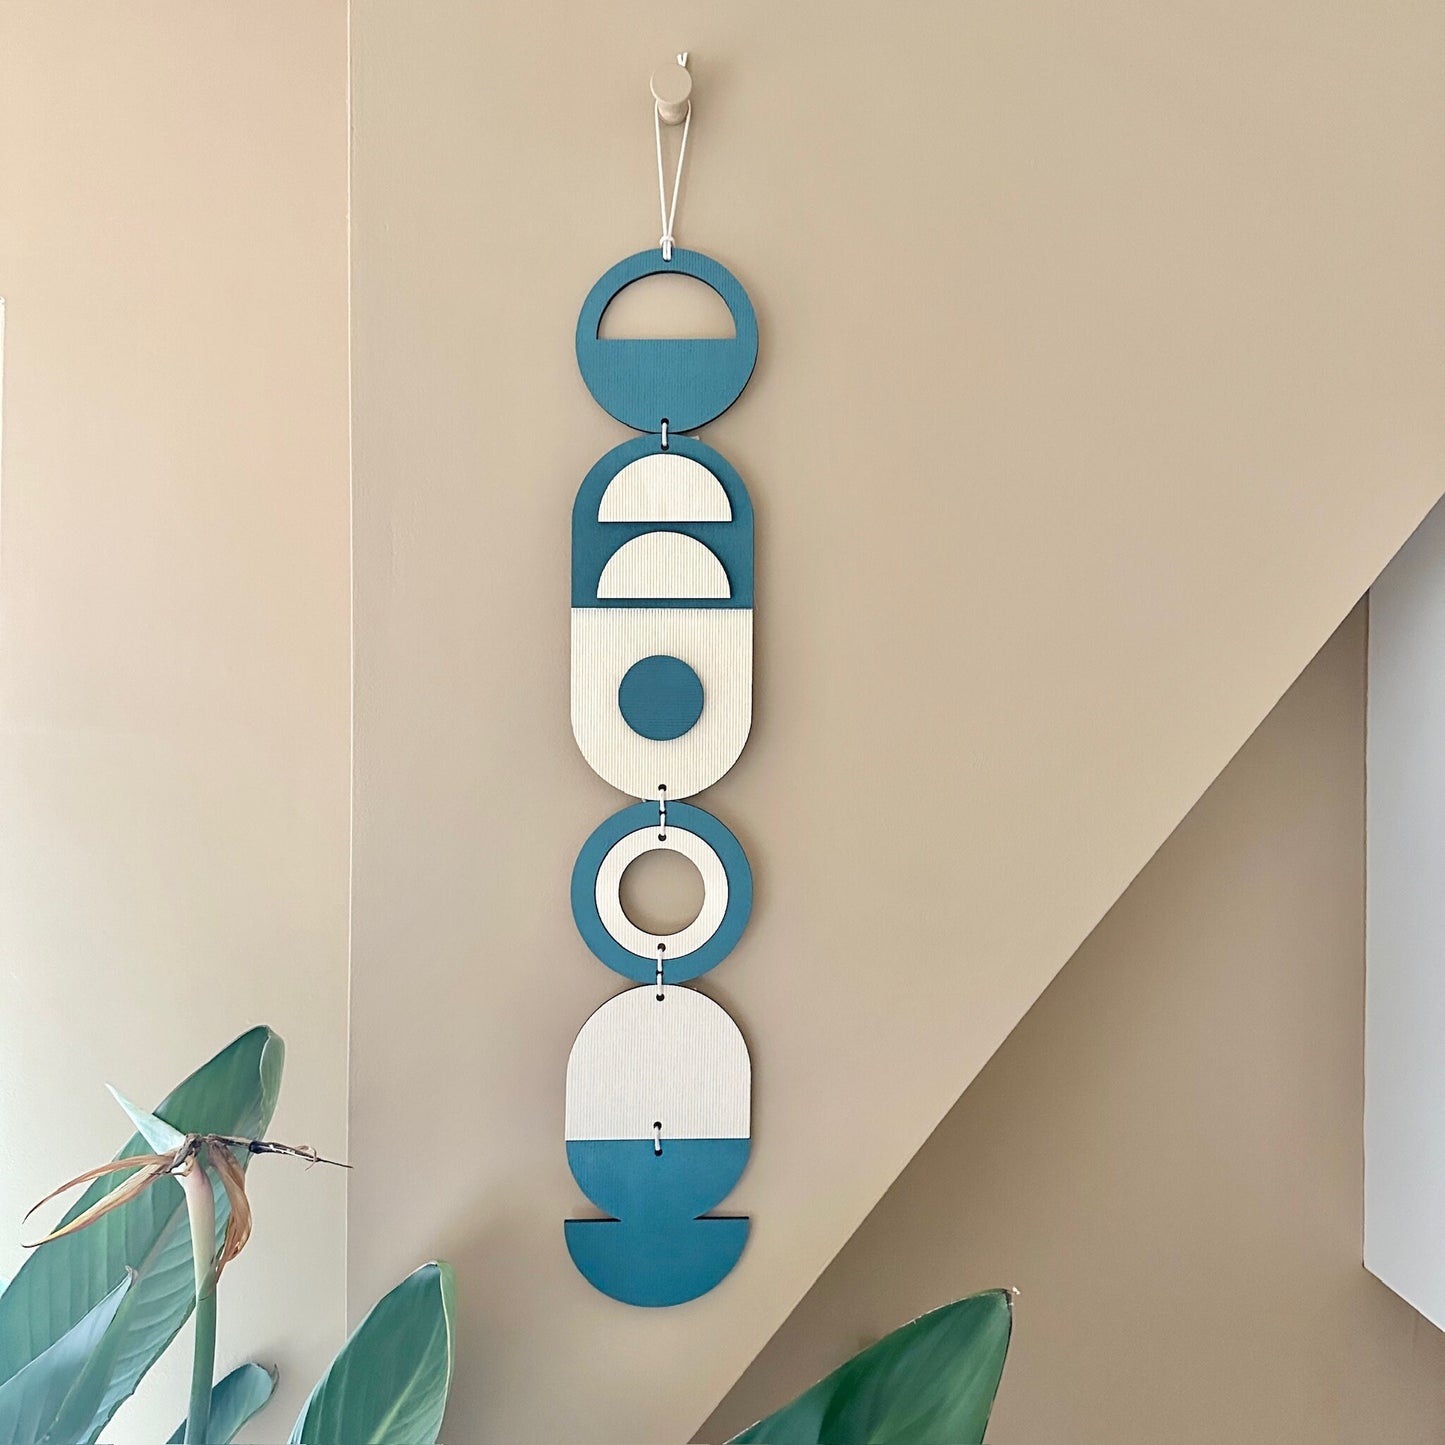 Teal Wall Hanging Gift - Geometric Wall Art - New Home Gift - Housewarming Present - Mid-Century Home Decor - Art Gifting